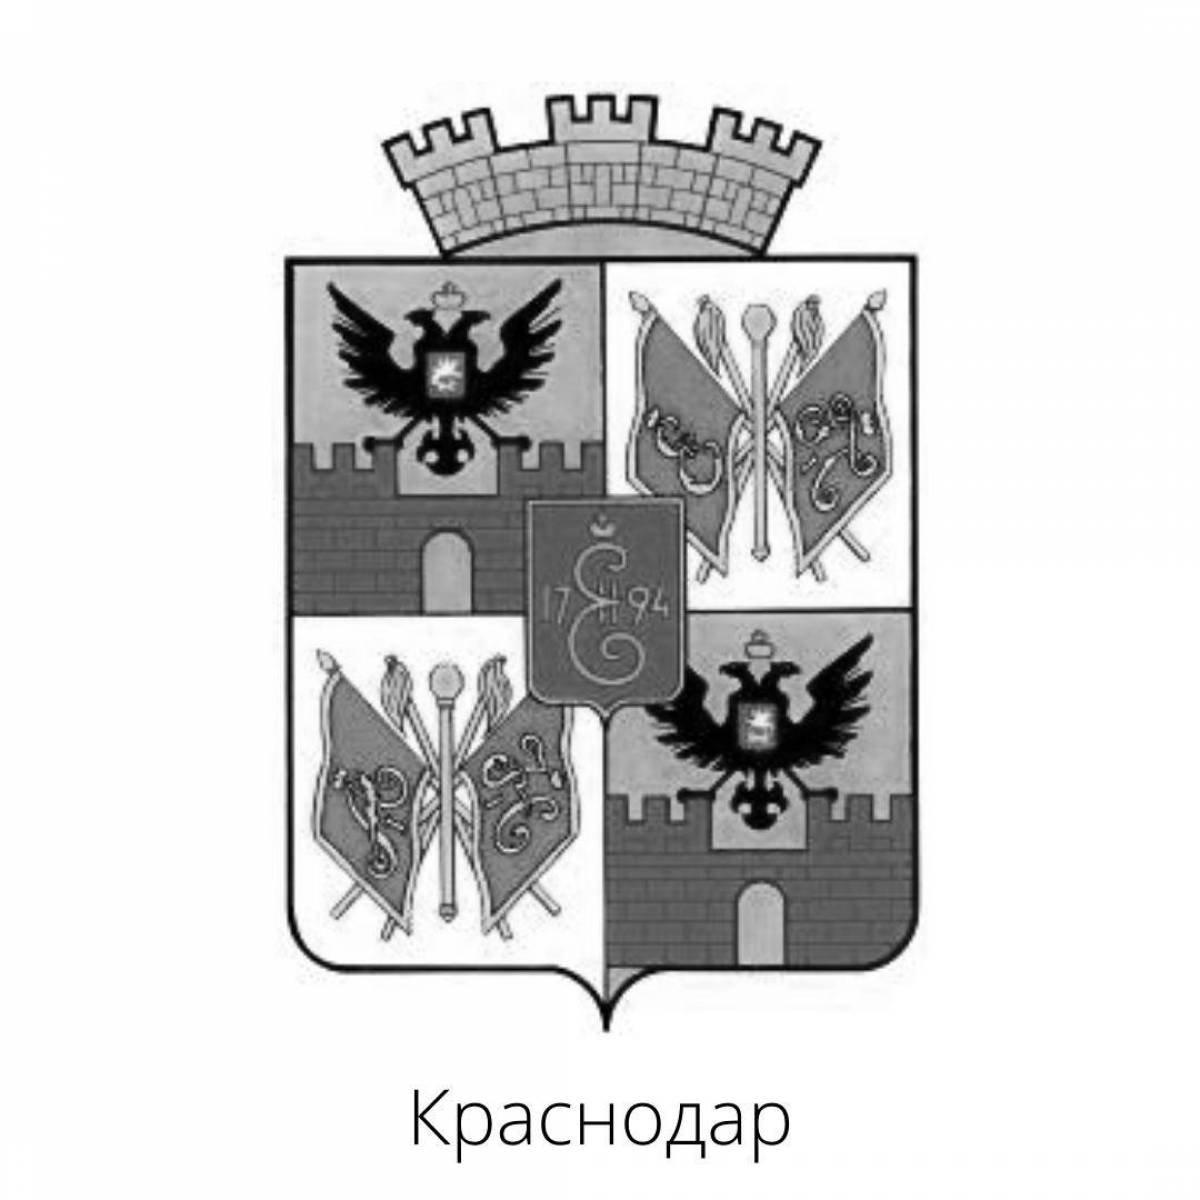 Dazzling flag of krasnodar